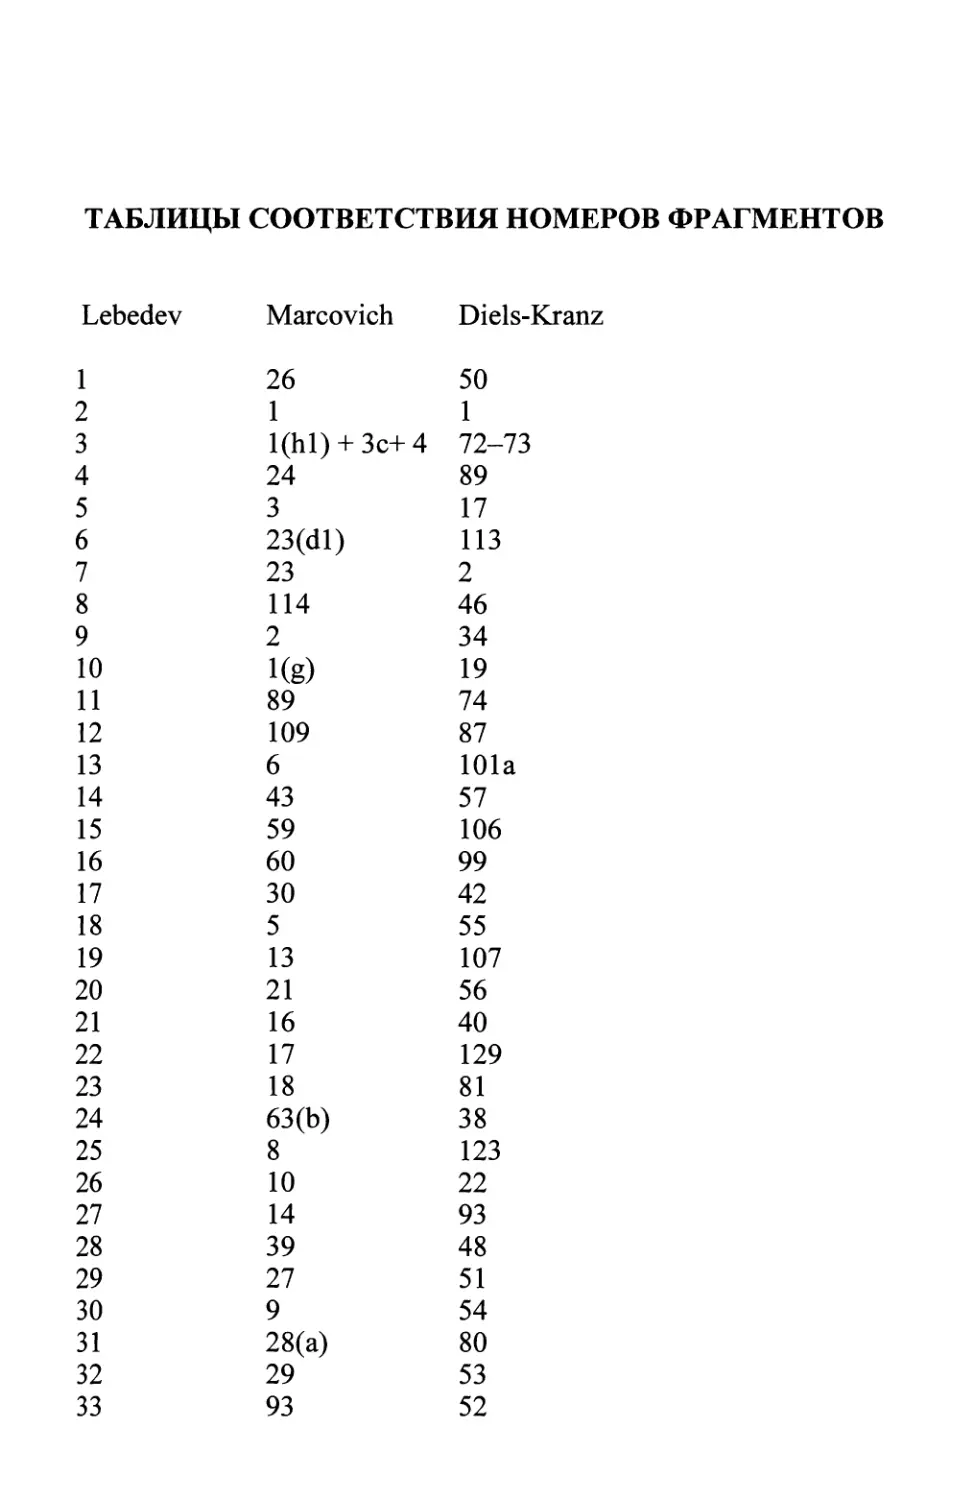 Таблицы соответствия номеров фрагментов
Lebedev — Marcovich — Diels-Kranz